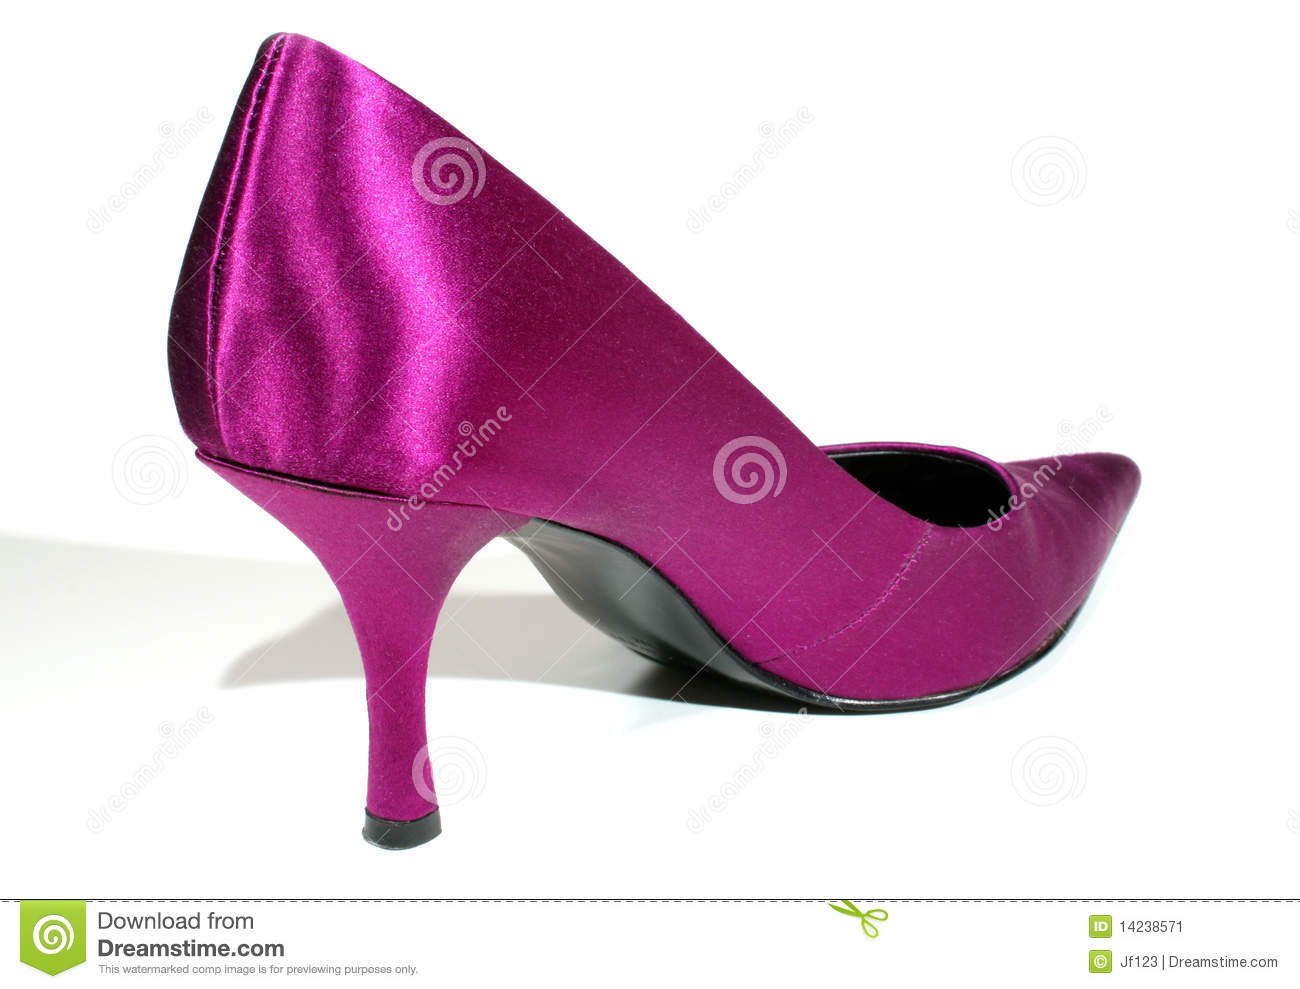 Fancy Shoe Stock Image   Image  14238571